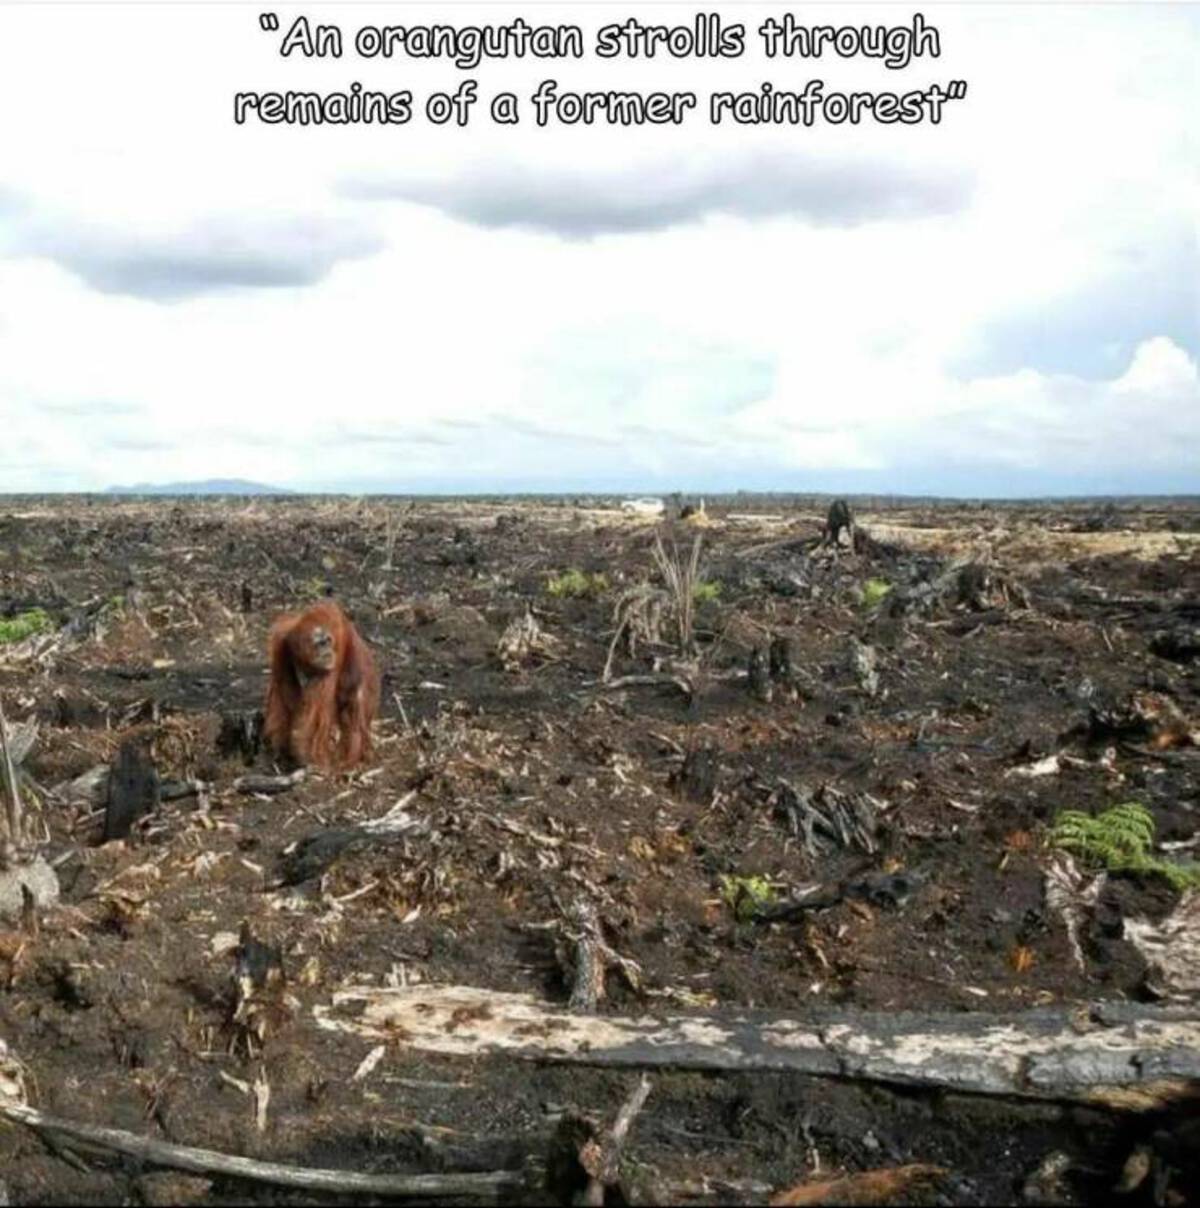 waste - "An orangutan strolls through remains of a former rainforest"